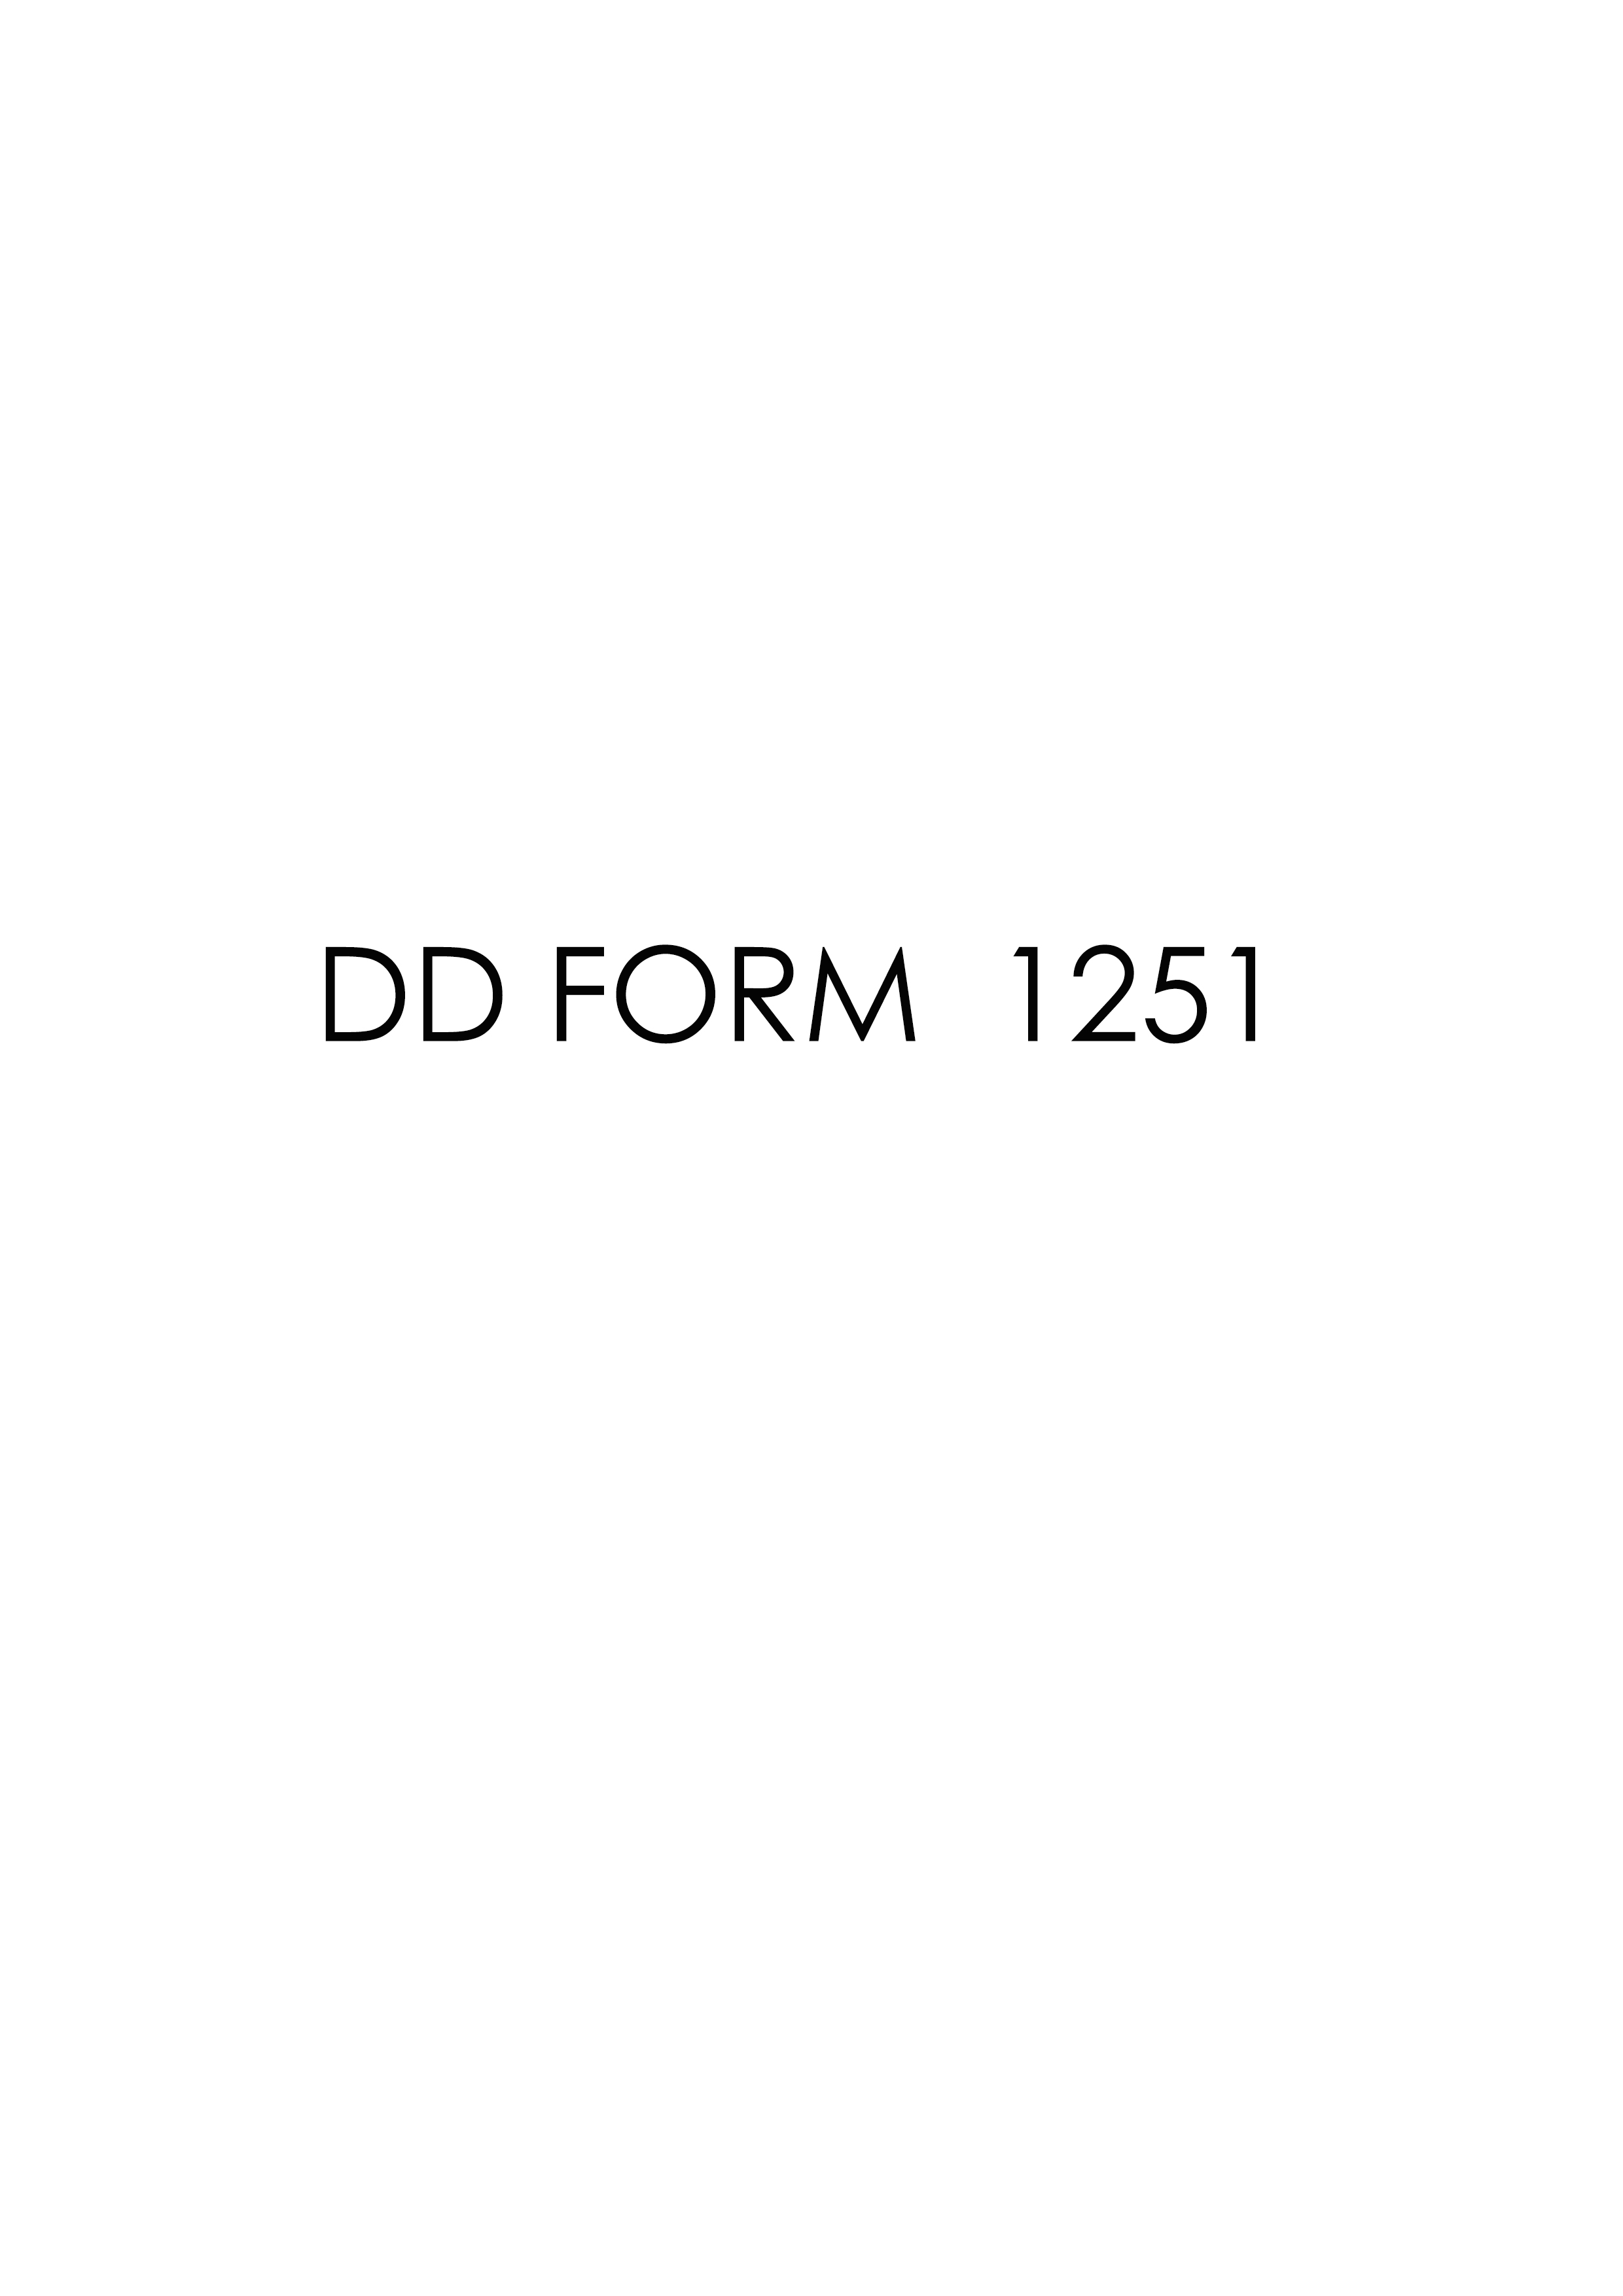 Download dd 1251 Form